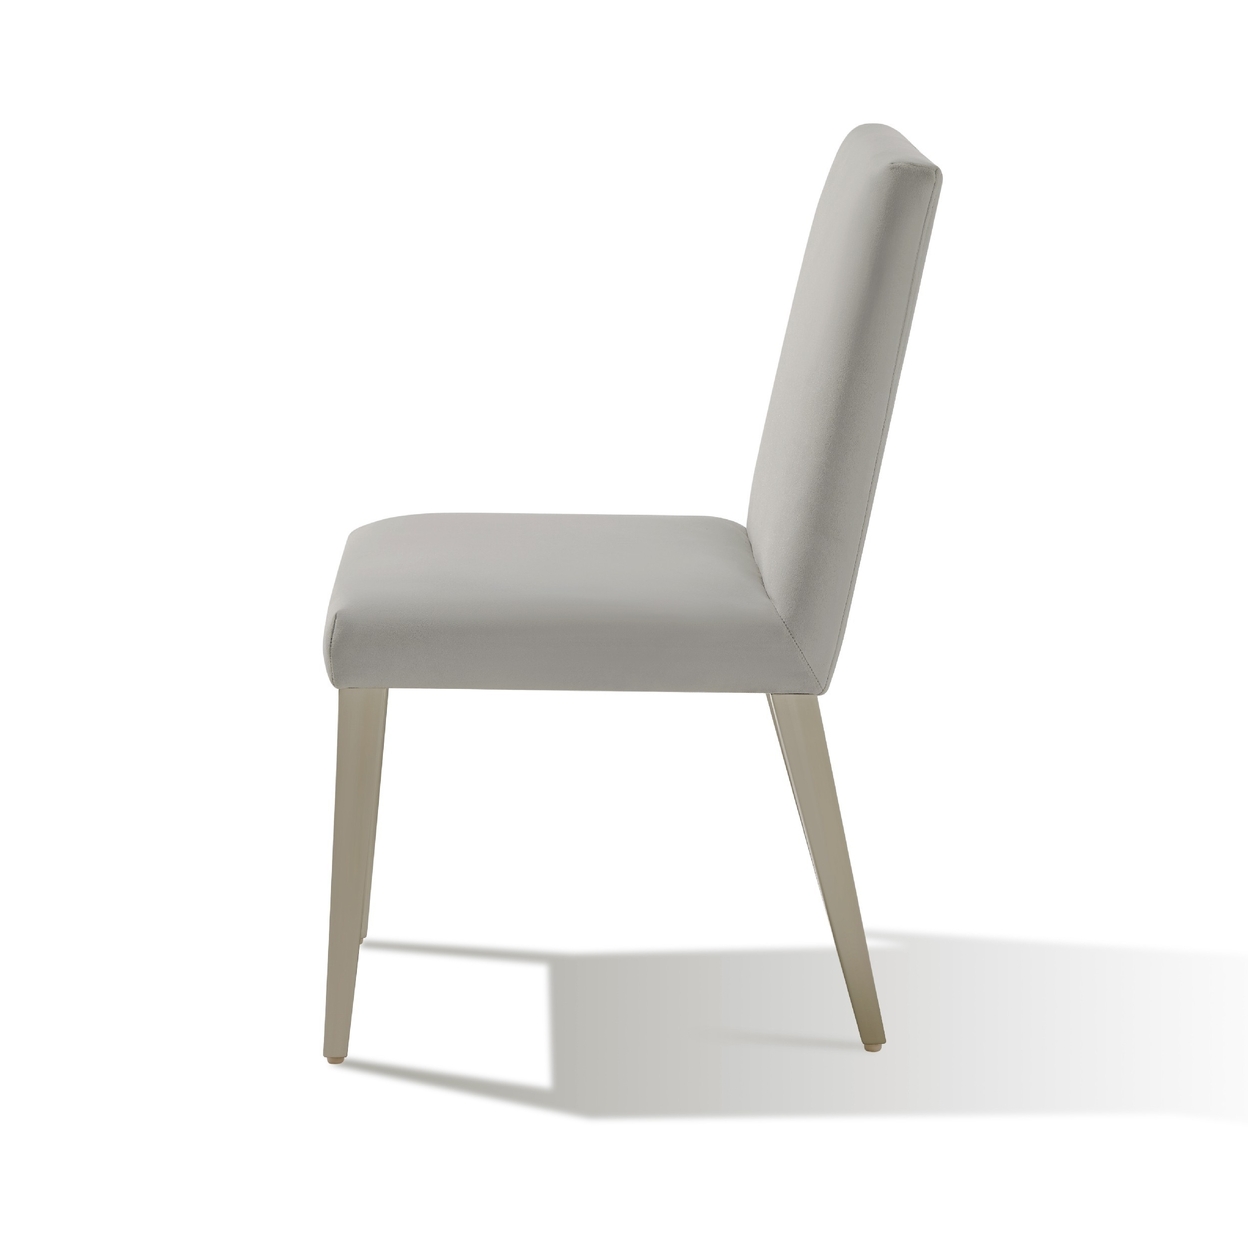 Hal 18 Inch Parson Dining Chair, Fabric Upholstered, Set Of 2, Smoke Gray- Saltoro Sherpi